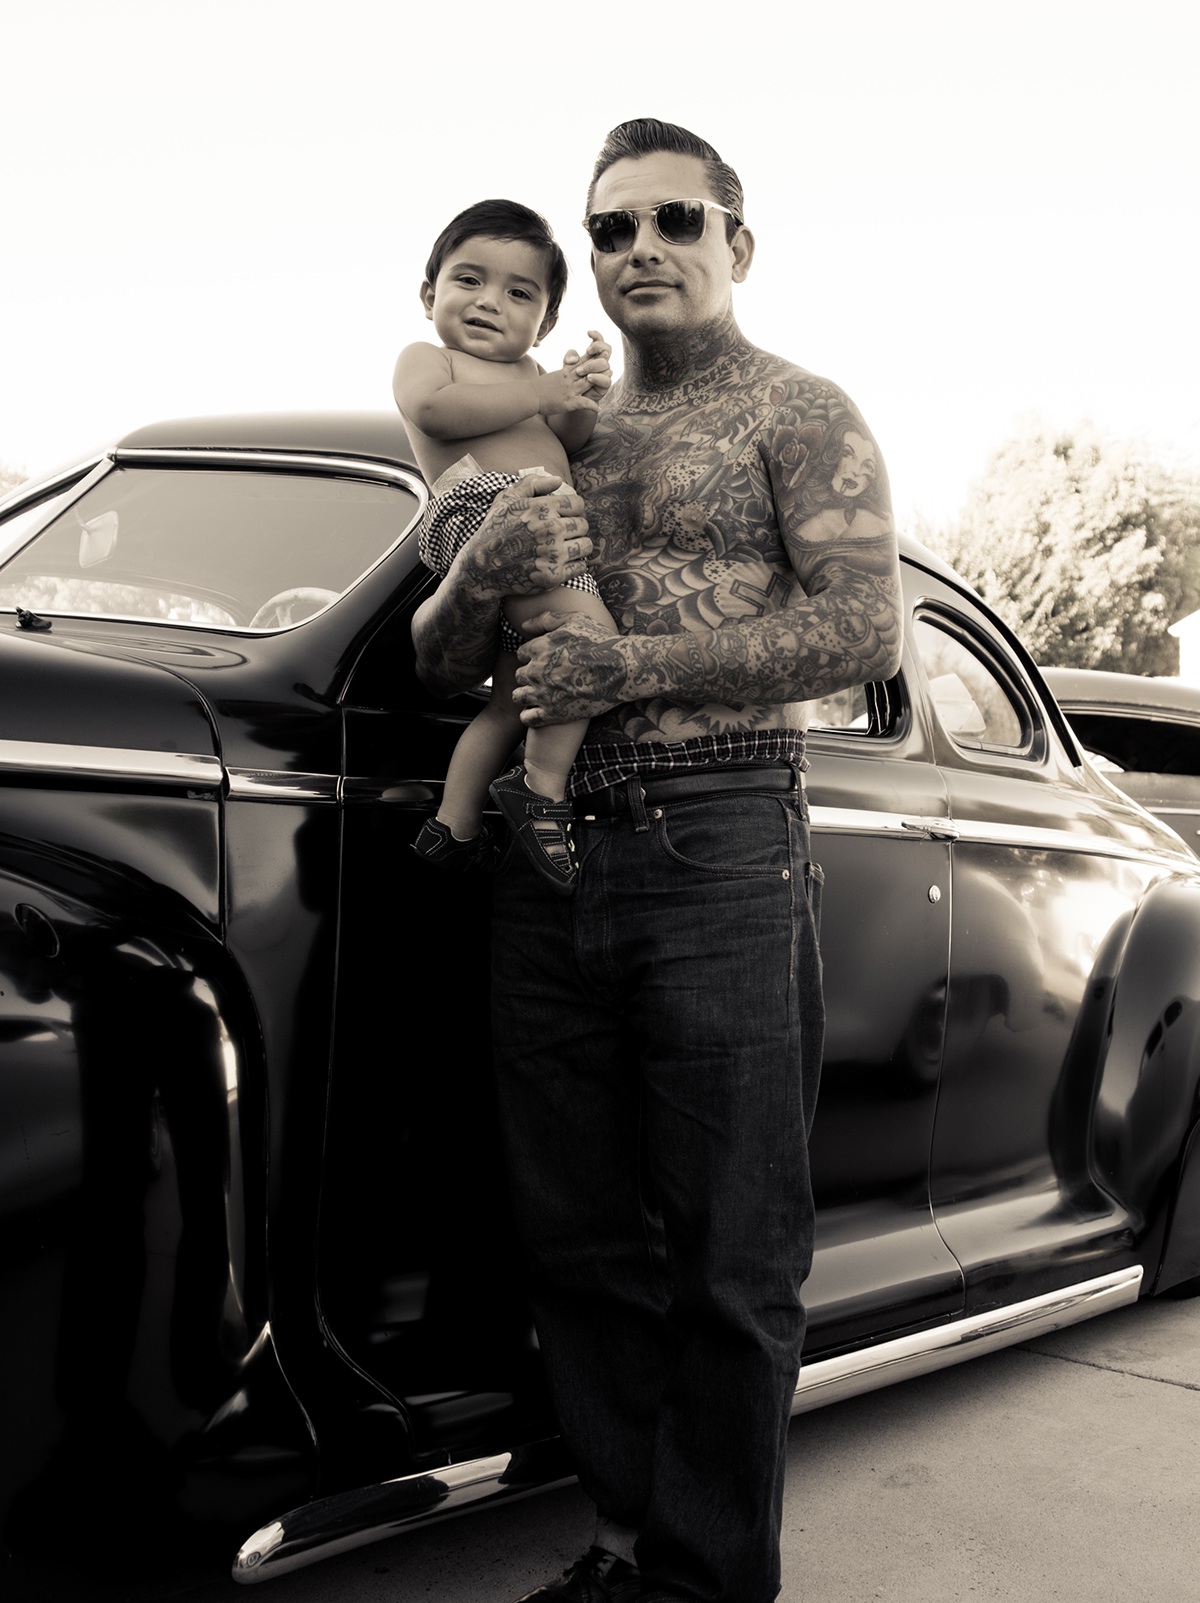 Adobe Portfolio Rockabilly lifestyle people portraits tattoos Cars Classic customcars Outdoor vintage Style California